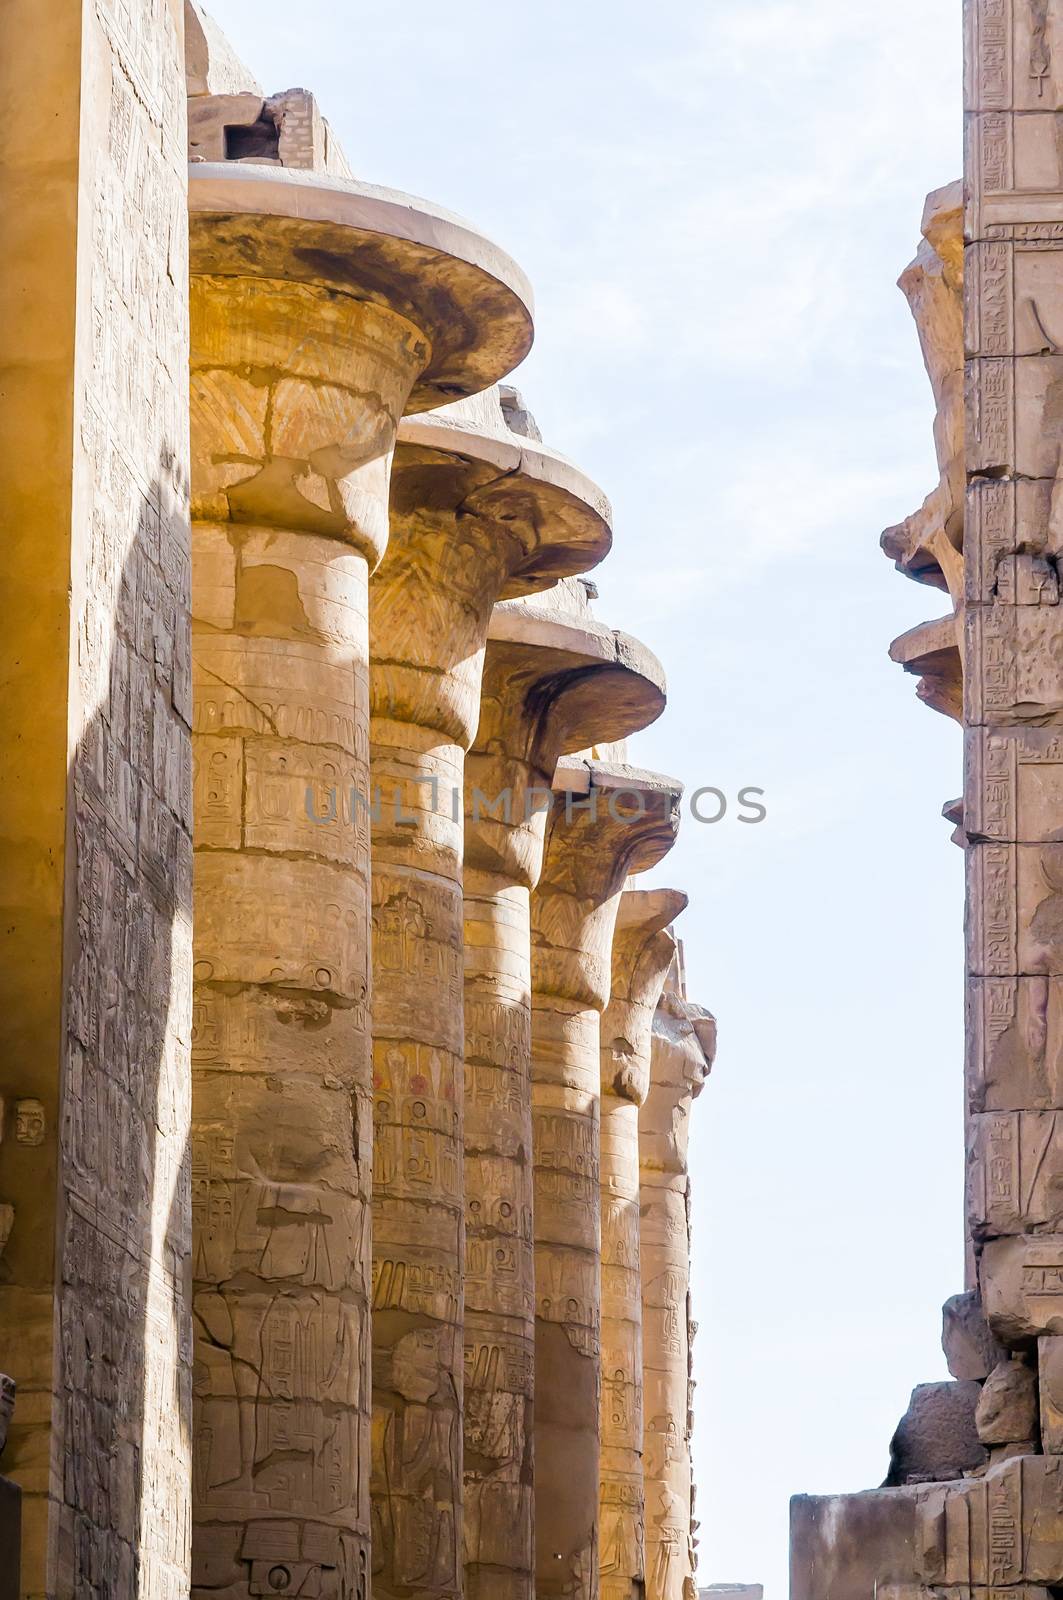 Columns in the Karnak temple in Luxor, Egypt by MaxalTamor